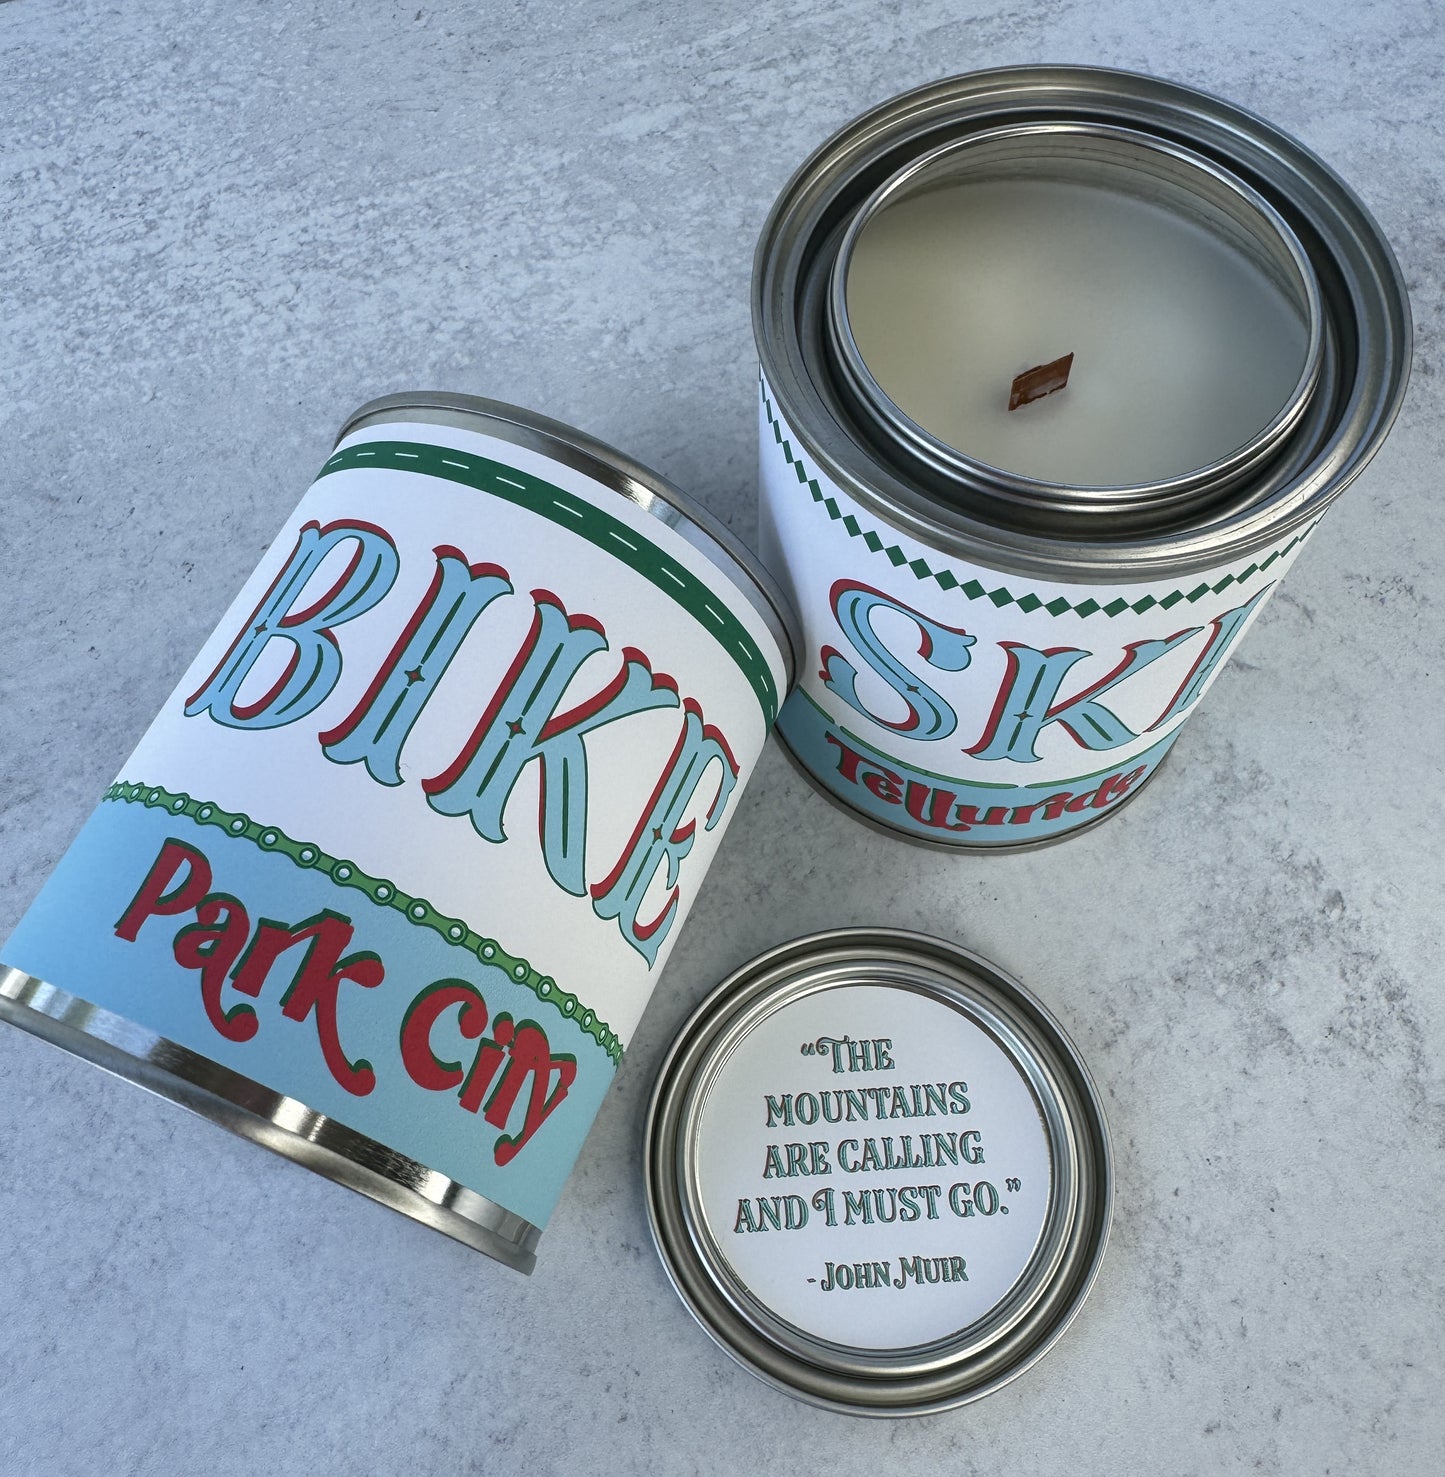 Bike Blue Mountain - Paint Tin Candle